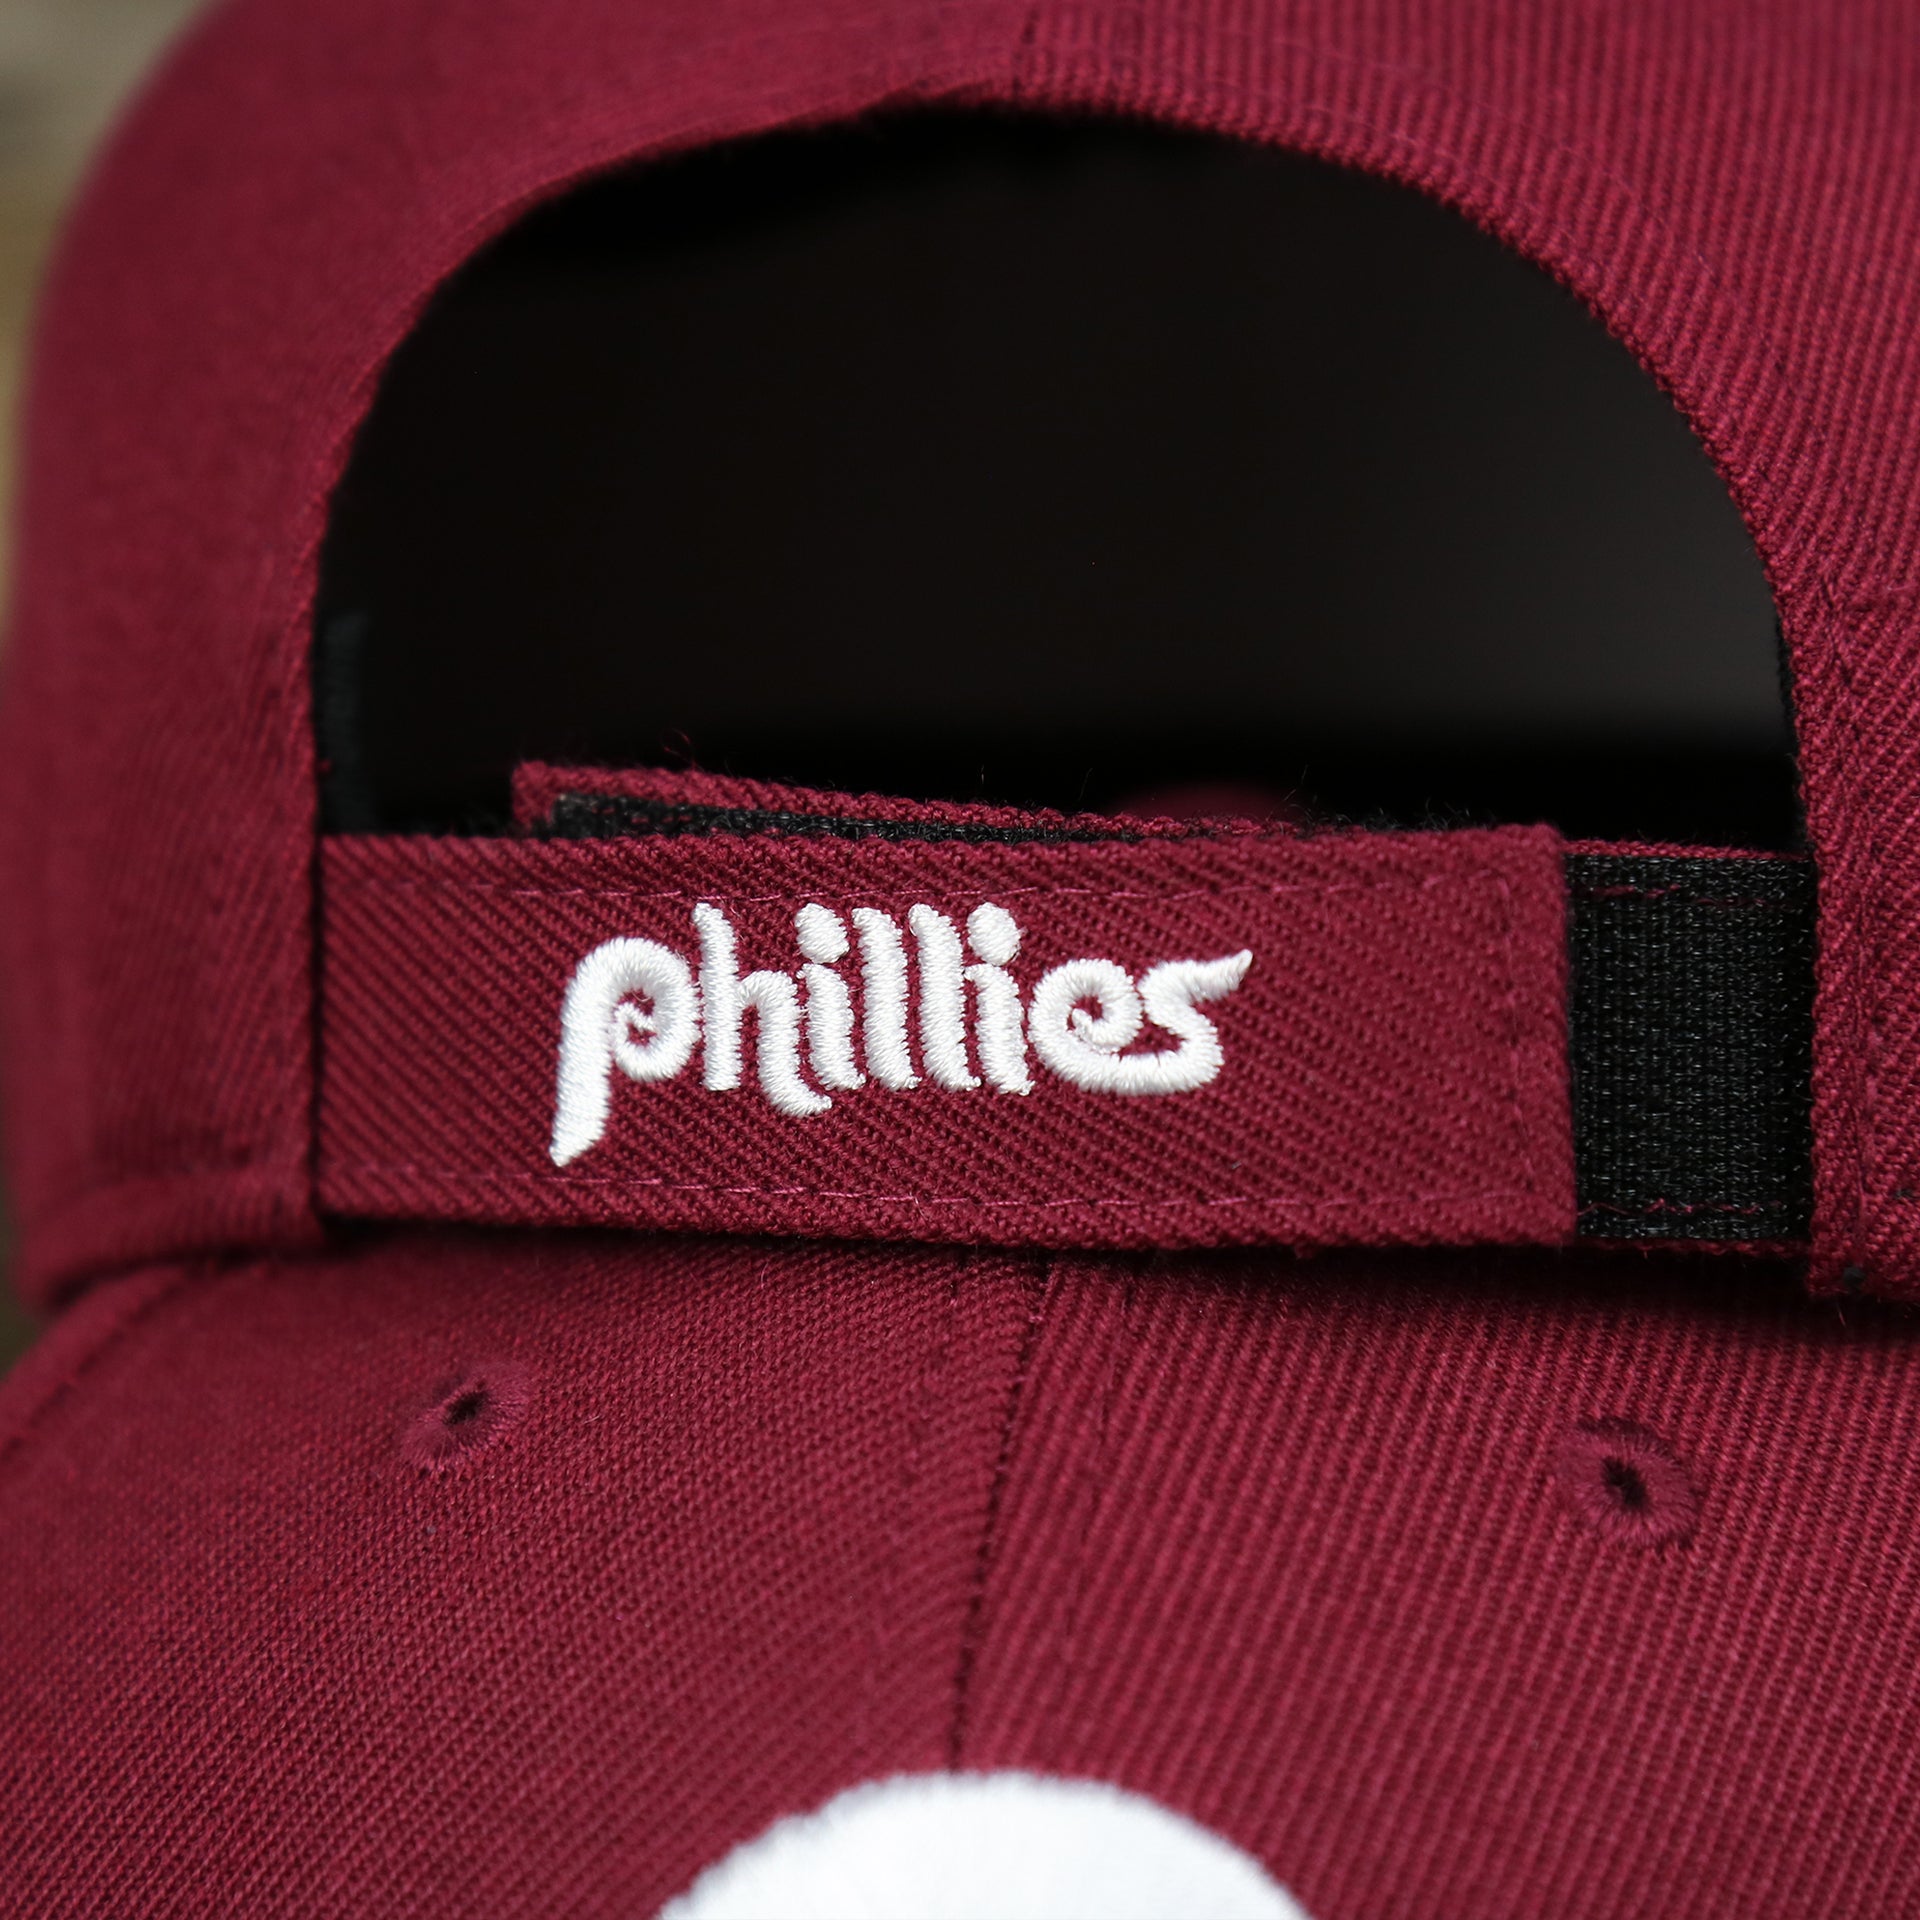 The Phillies Wordmark on the Cooperstown Philadelphia Phillies Retro Phillies Logo Gray Bottom Dad Hat | Maroon Dad Hat